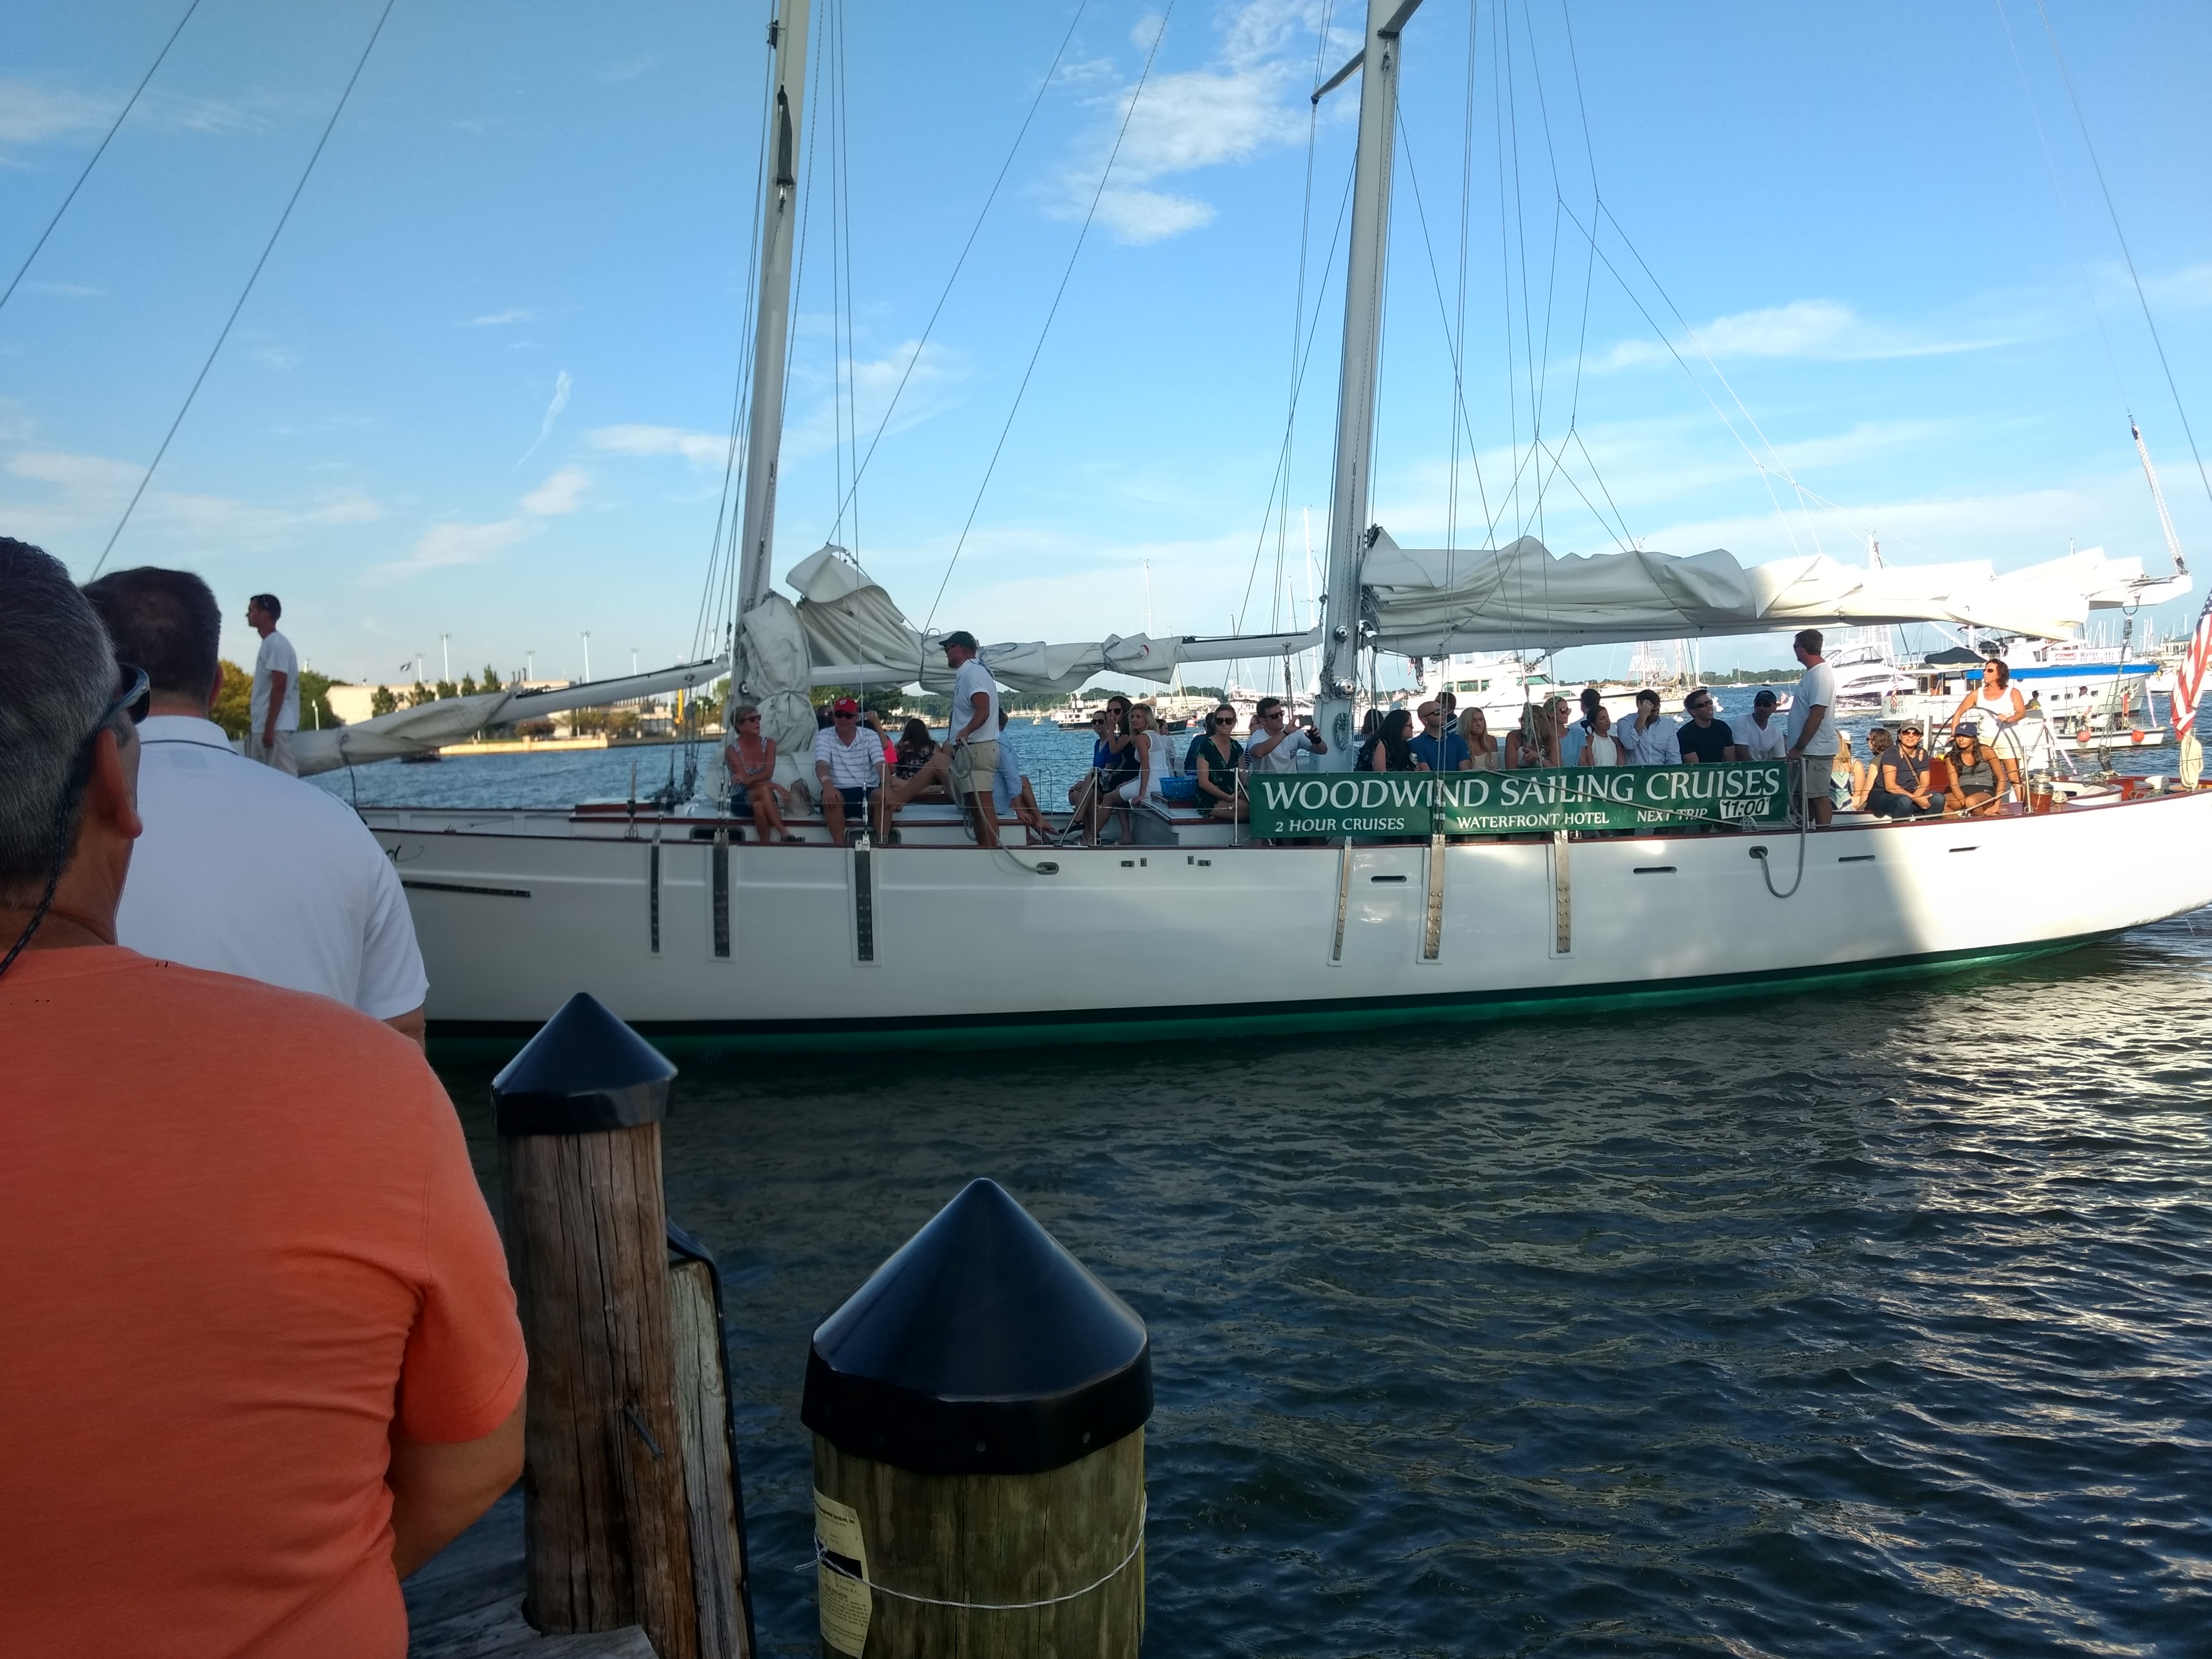 Schooner sails down and motoring into port